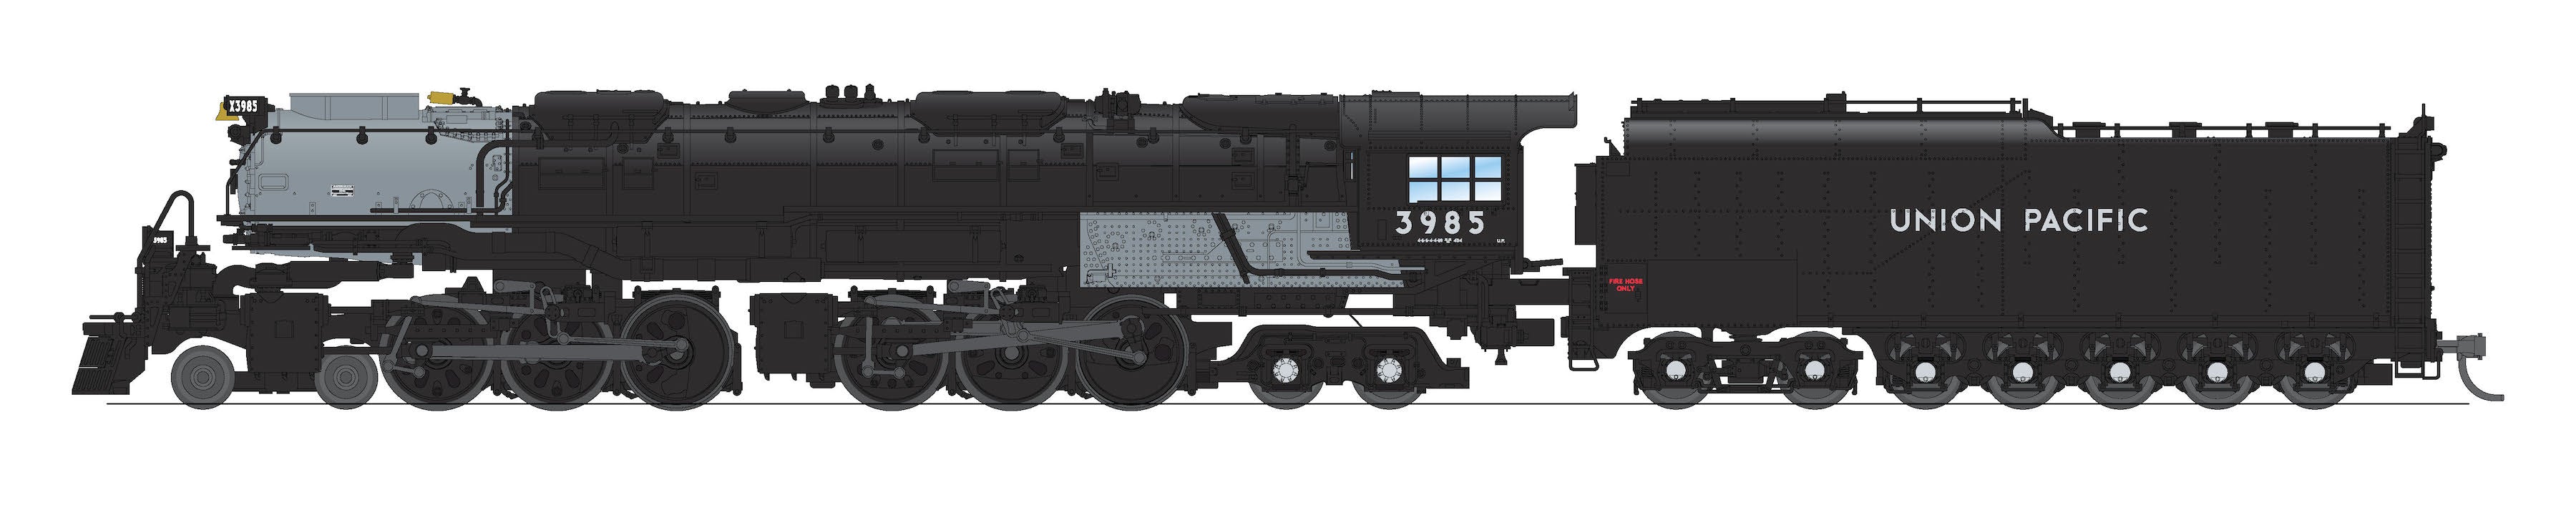 6986 UP Challenger 4-6-6-4, #3985 Excursion Locomotive, Oil Tender, Black & Graphite, Paragon4 Sound/DC/DCC, Smoke, N